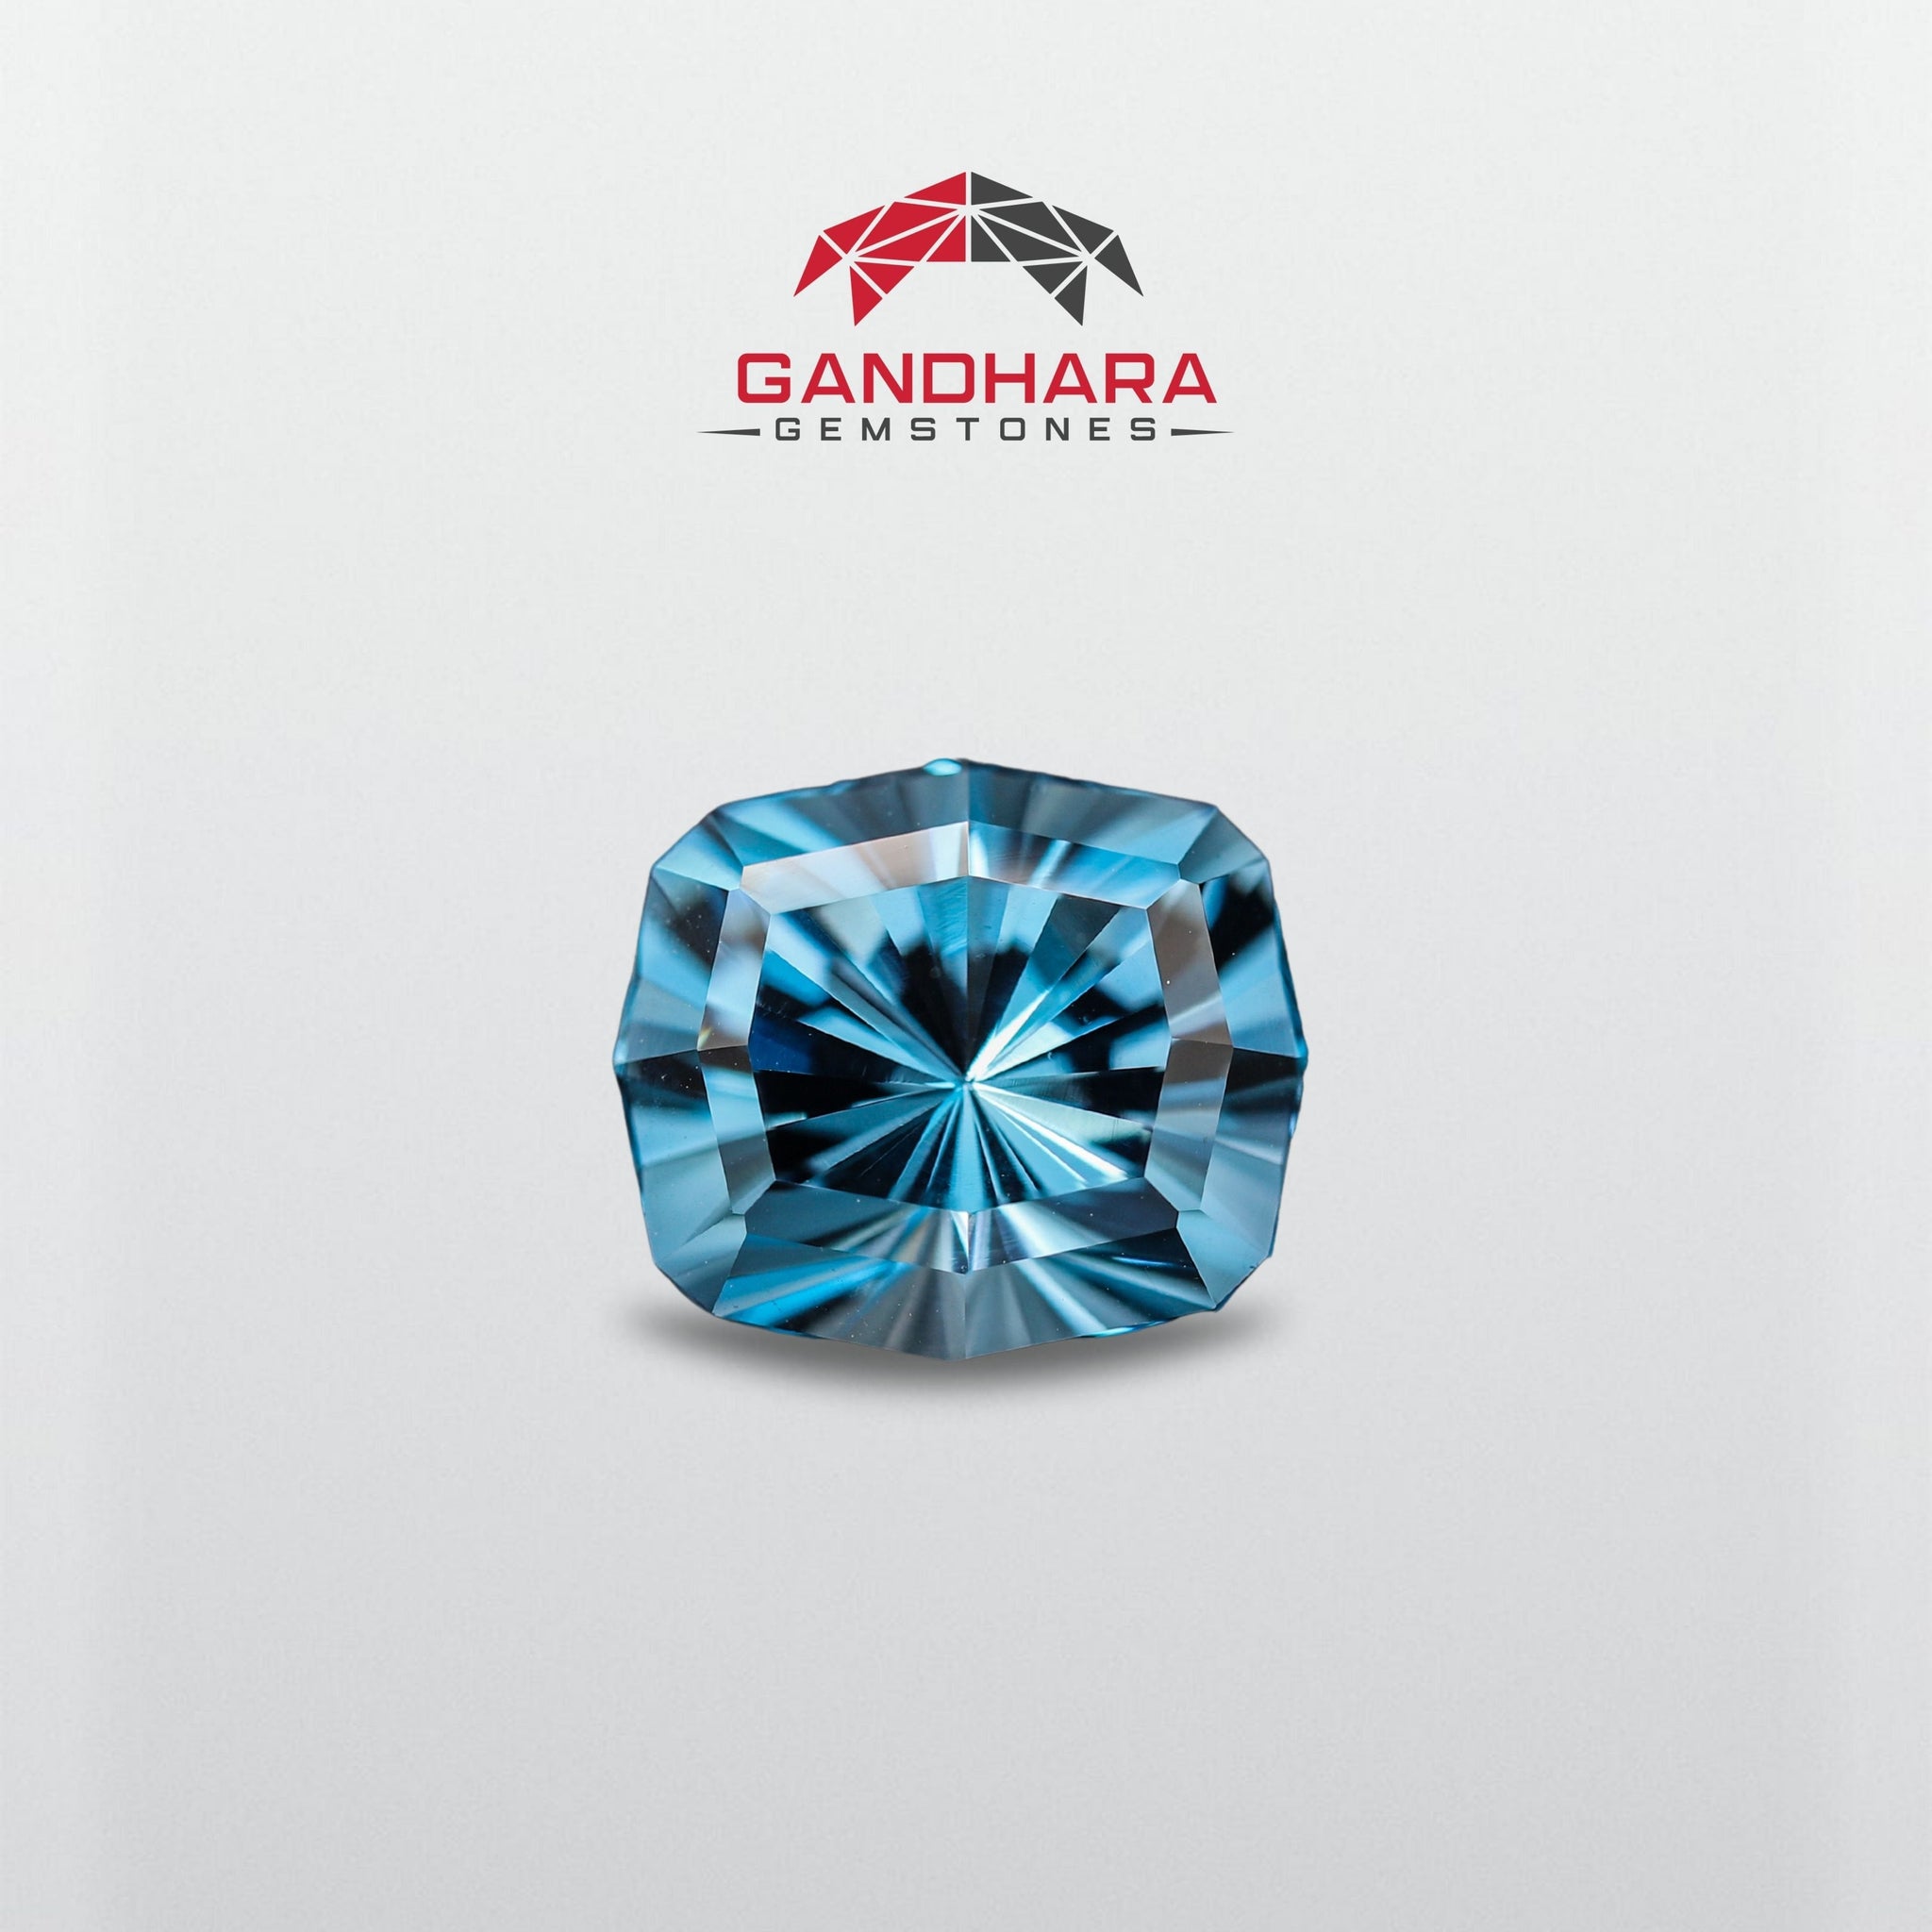 Buy Topaz Gemstones at the best price